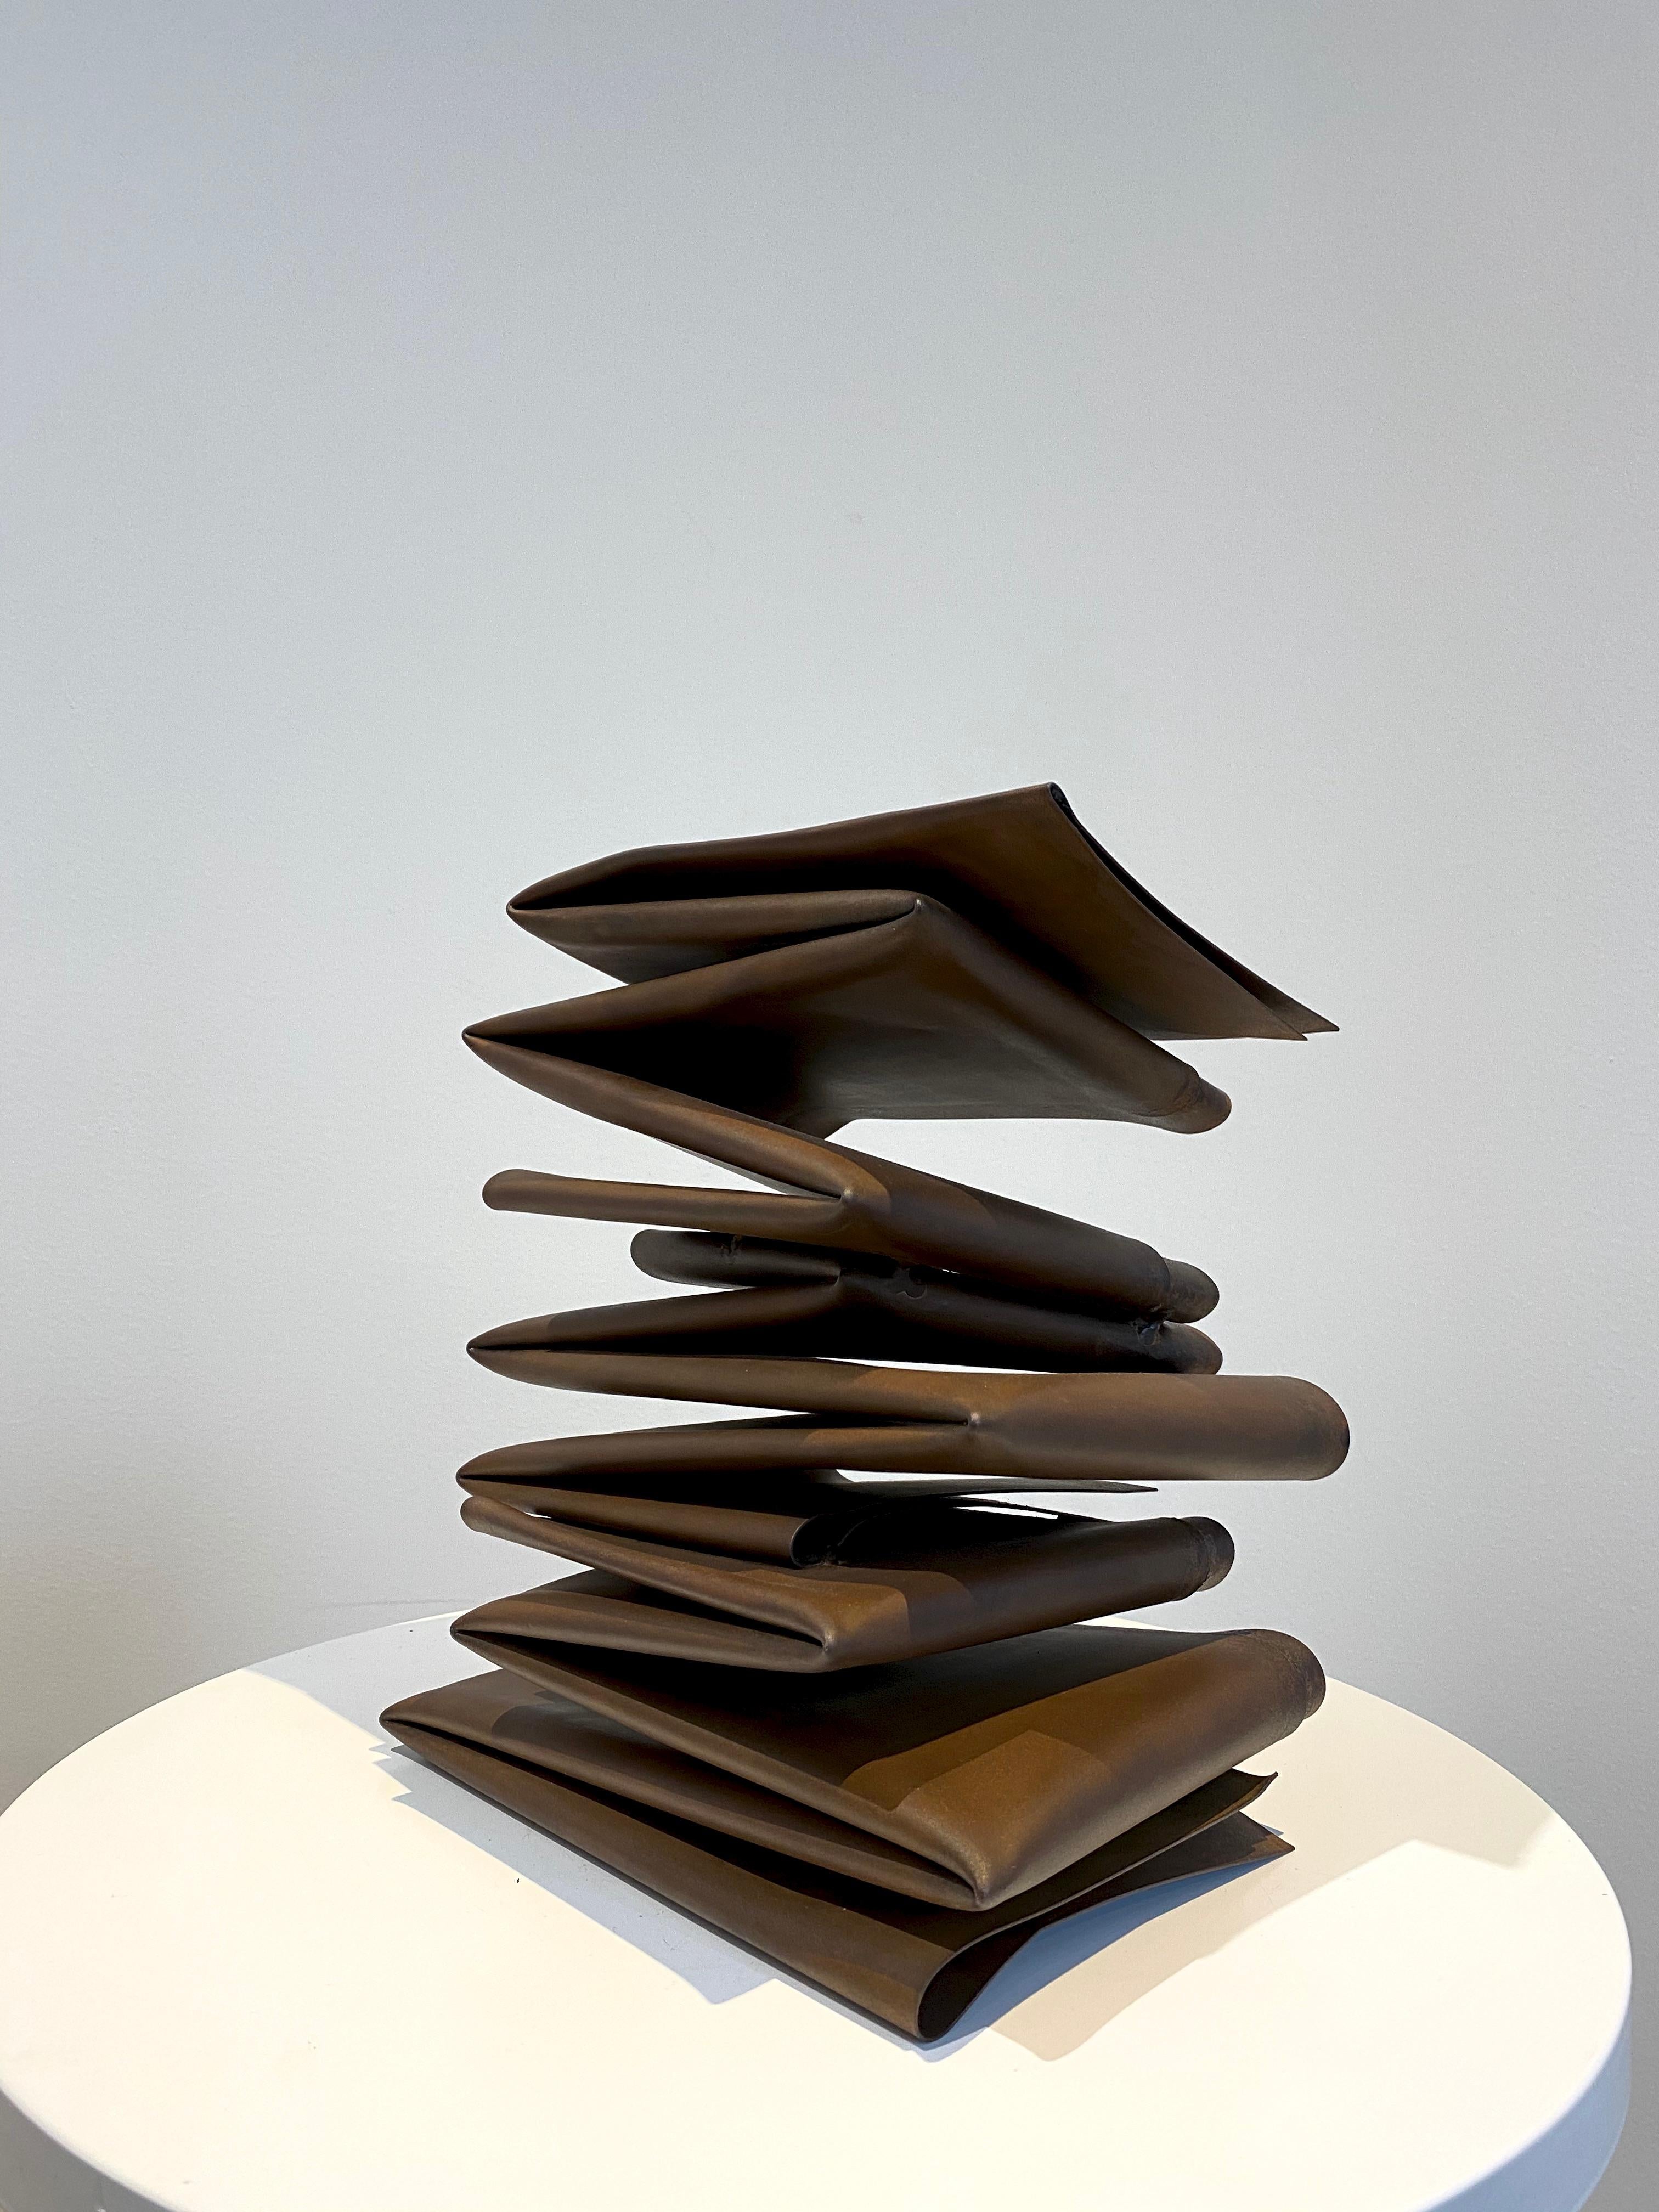 Pliage, 2017, Corten steel, minimalist, abstract, sculpture - Contemporary Sculpture by Etienne Viard